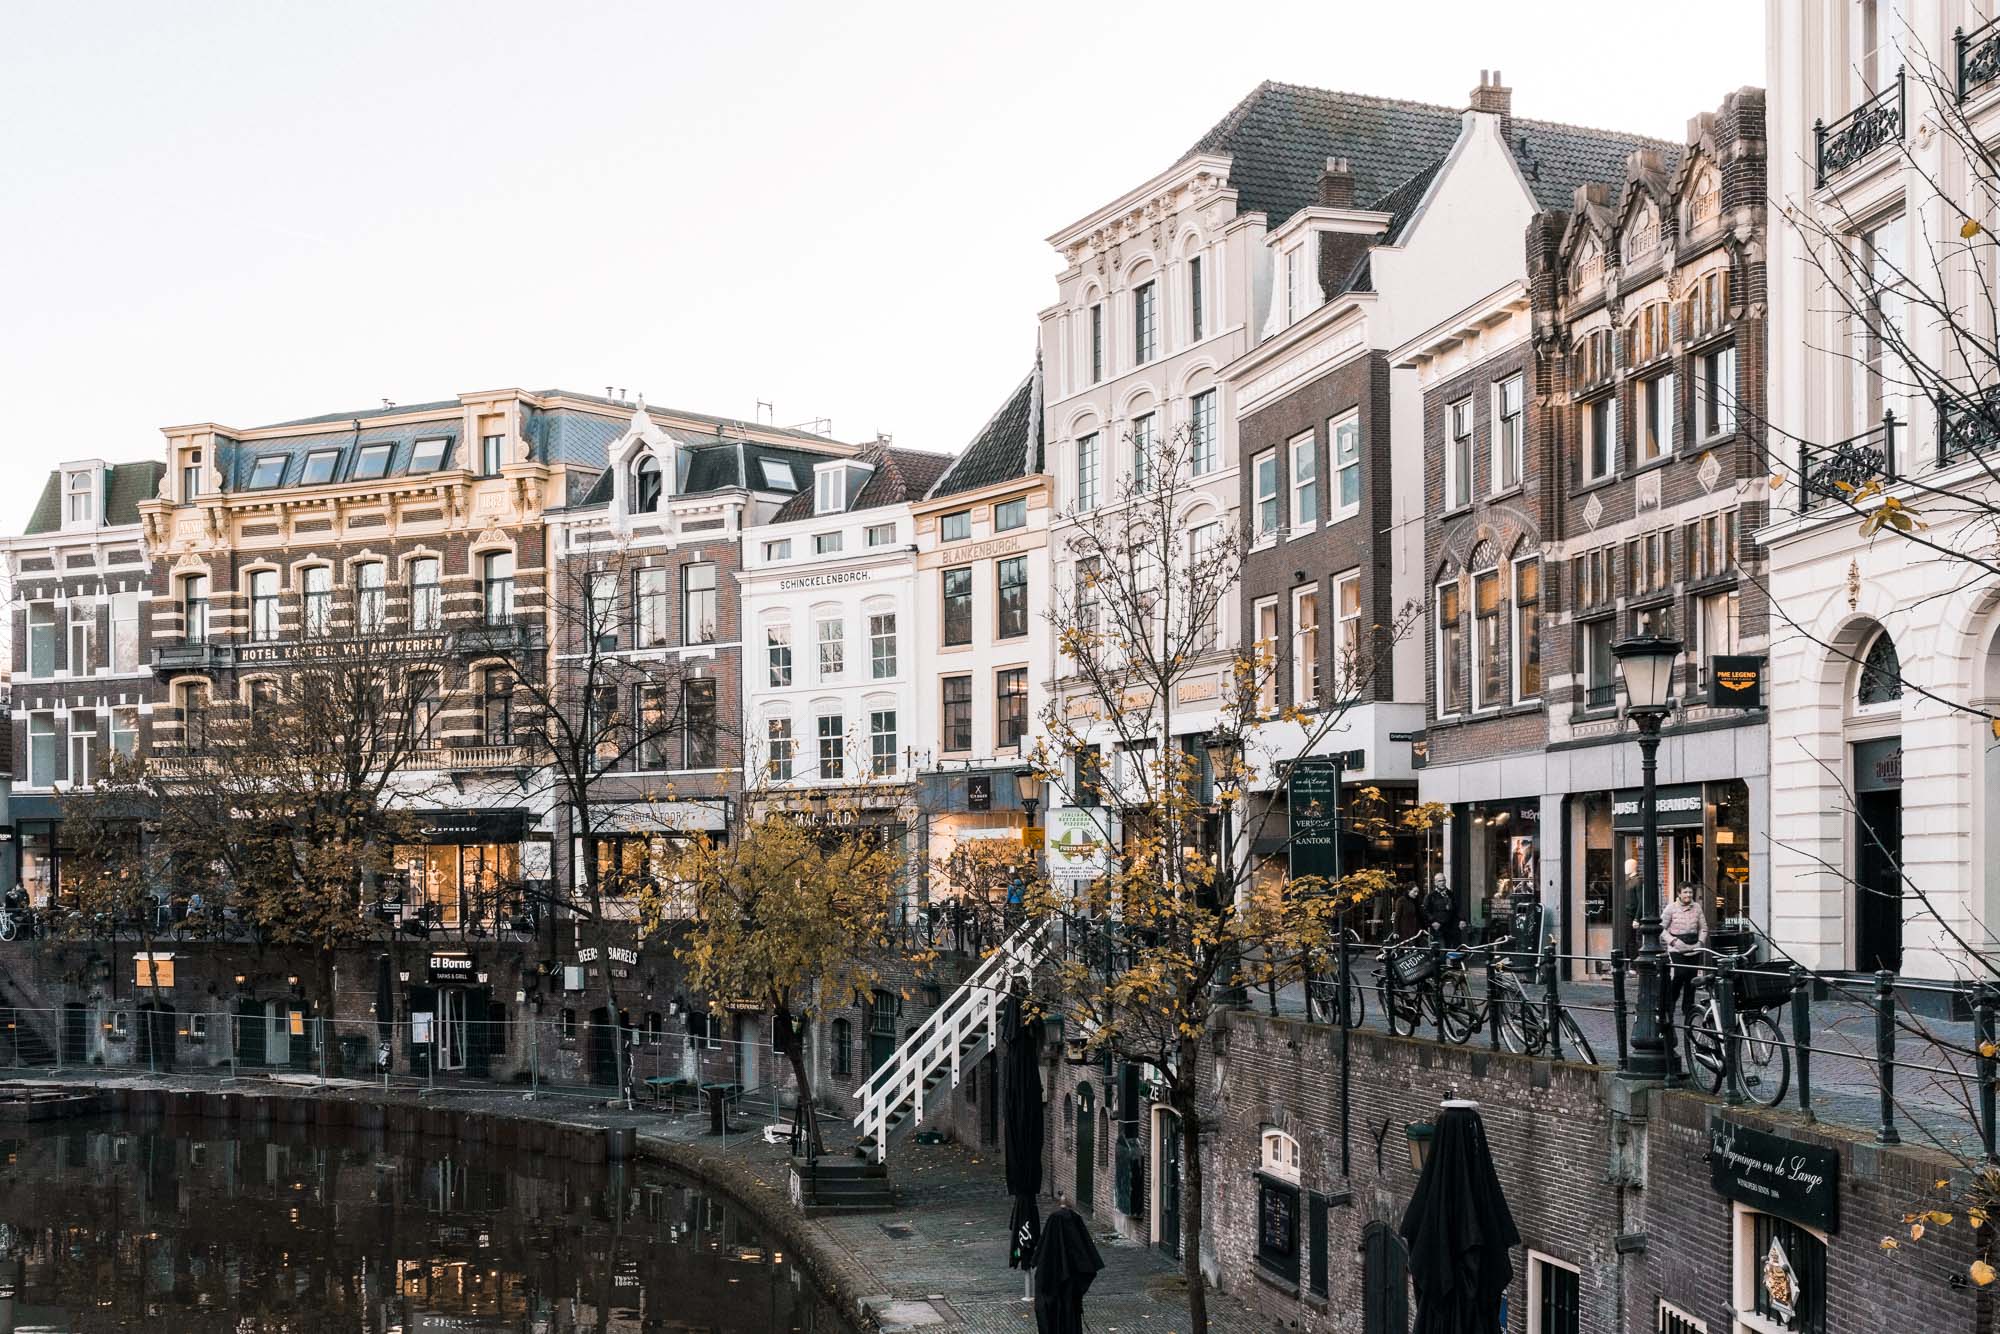 Canals in Utrecht, The Netherlands